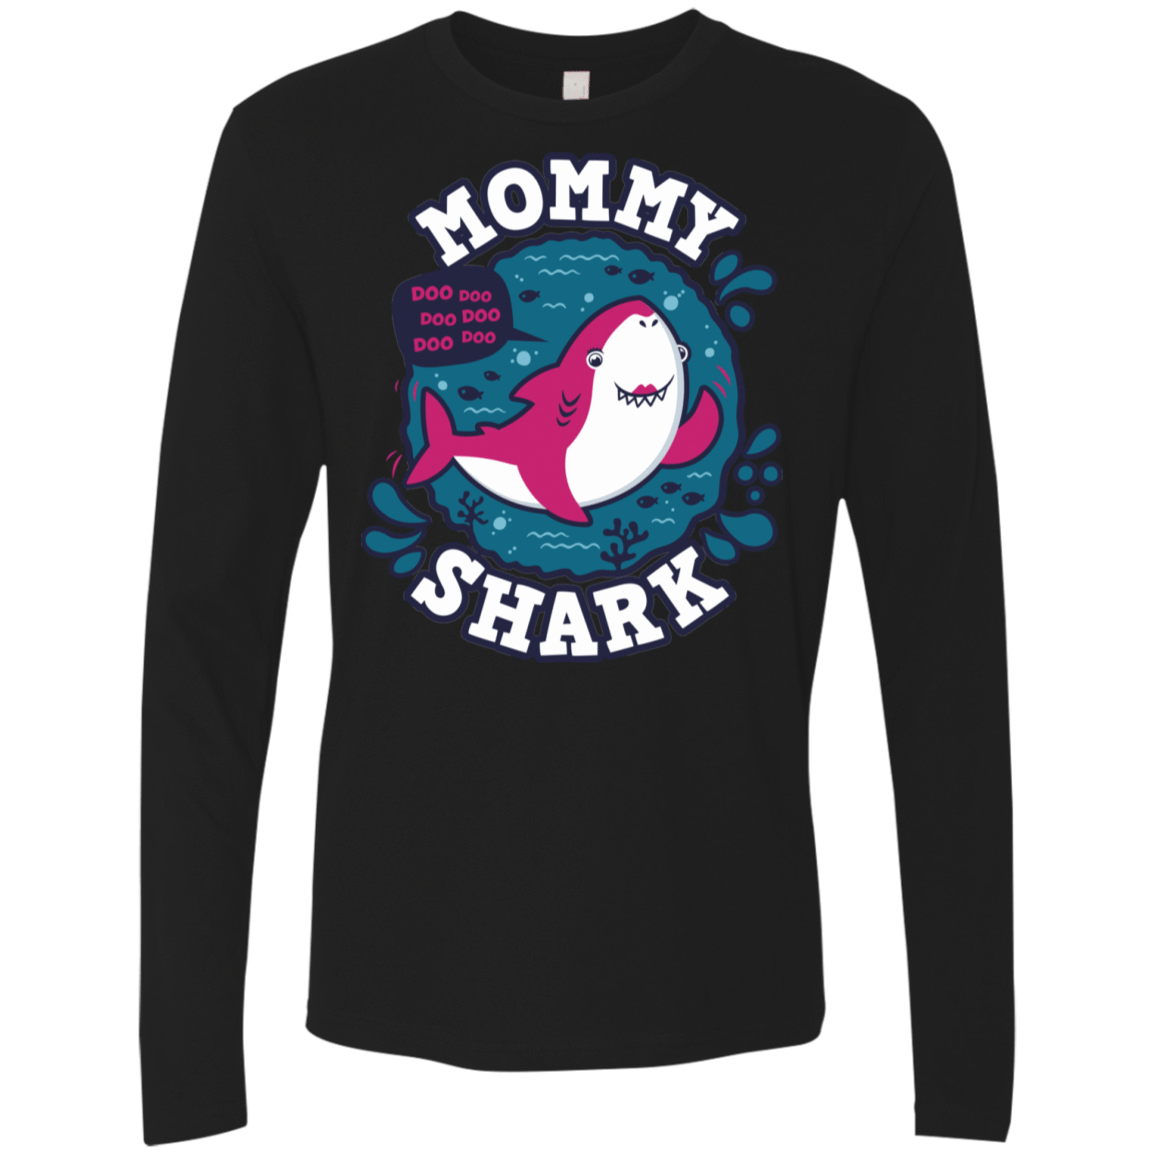 T-Shirts Black / S Shark Family trazo - Mommy Men's Premium Long Sleeve